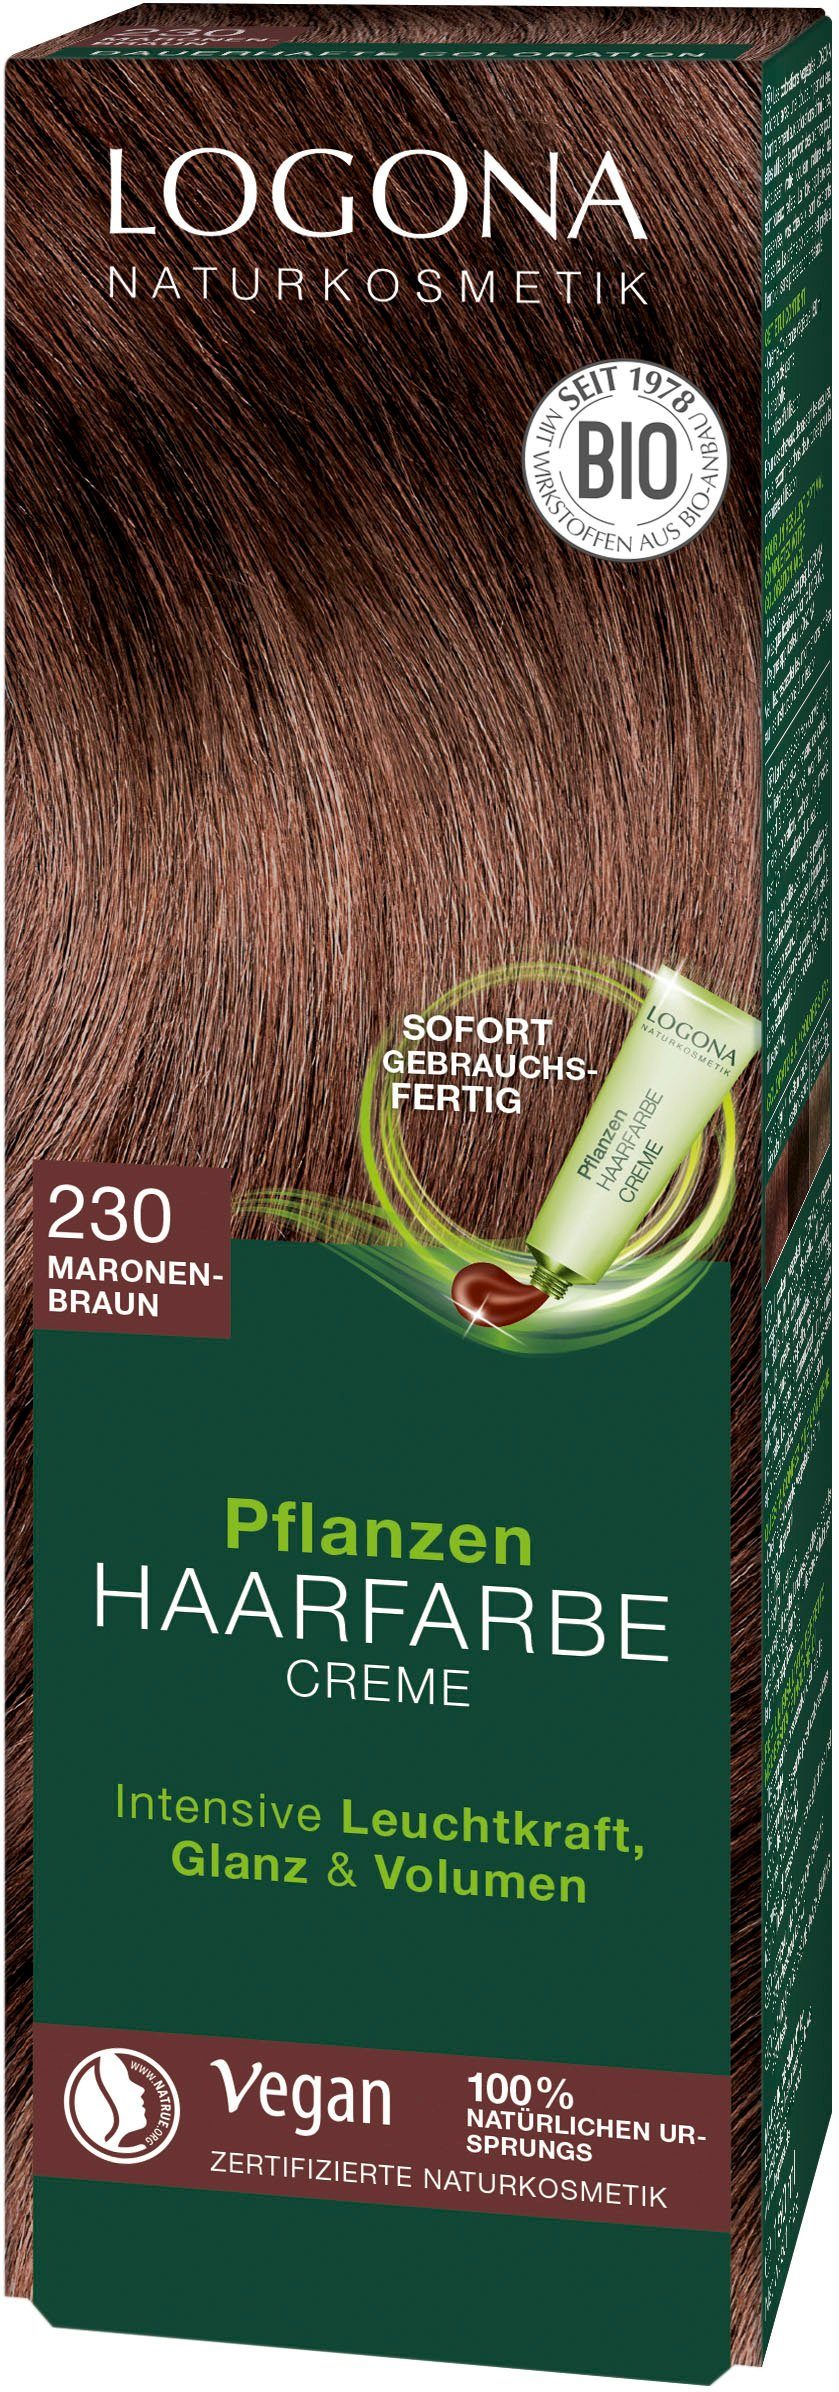 Pflanzen-Haarfarbe Creme Logona maronenbraun 230 LOGONA Haarfarbe